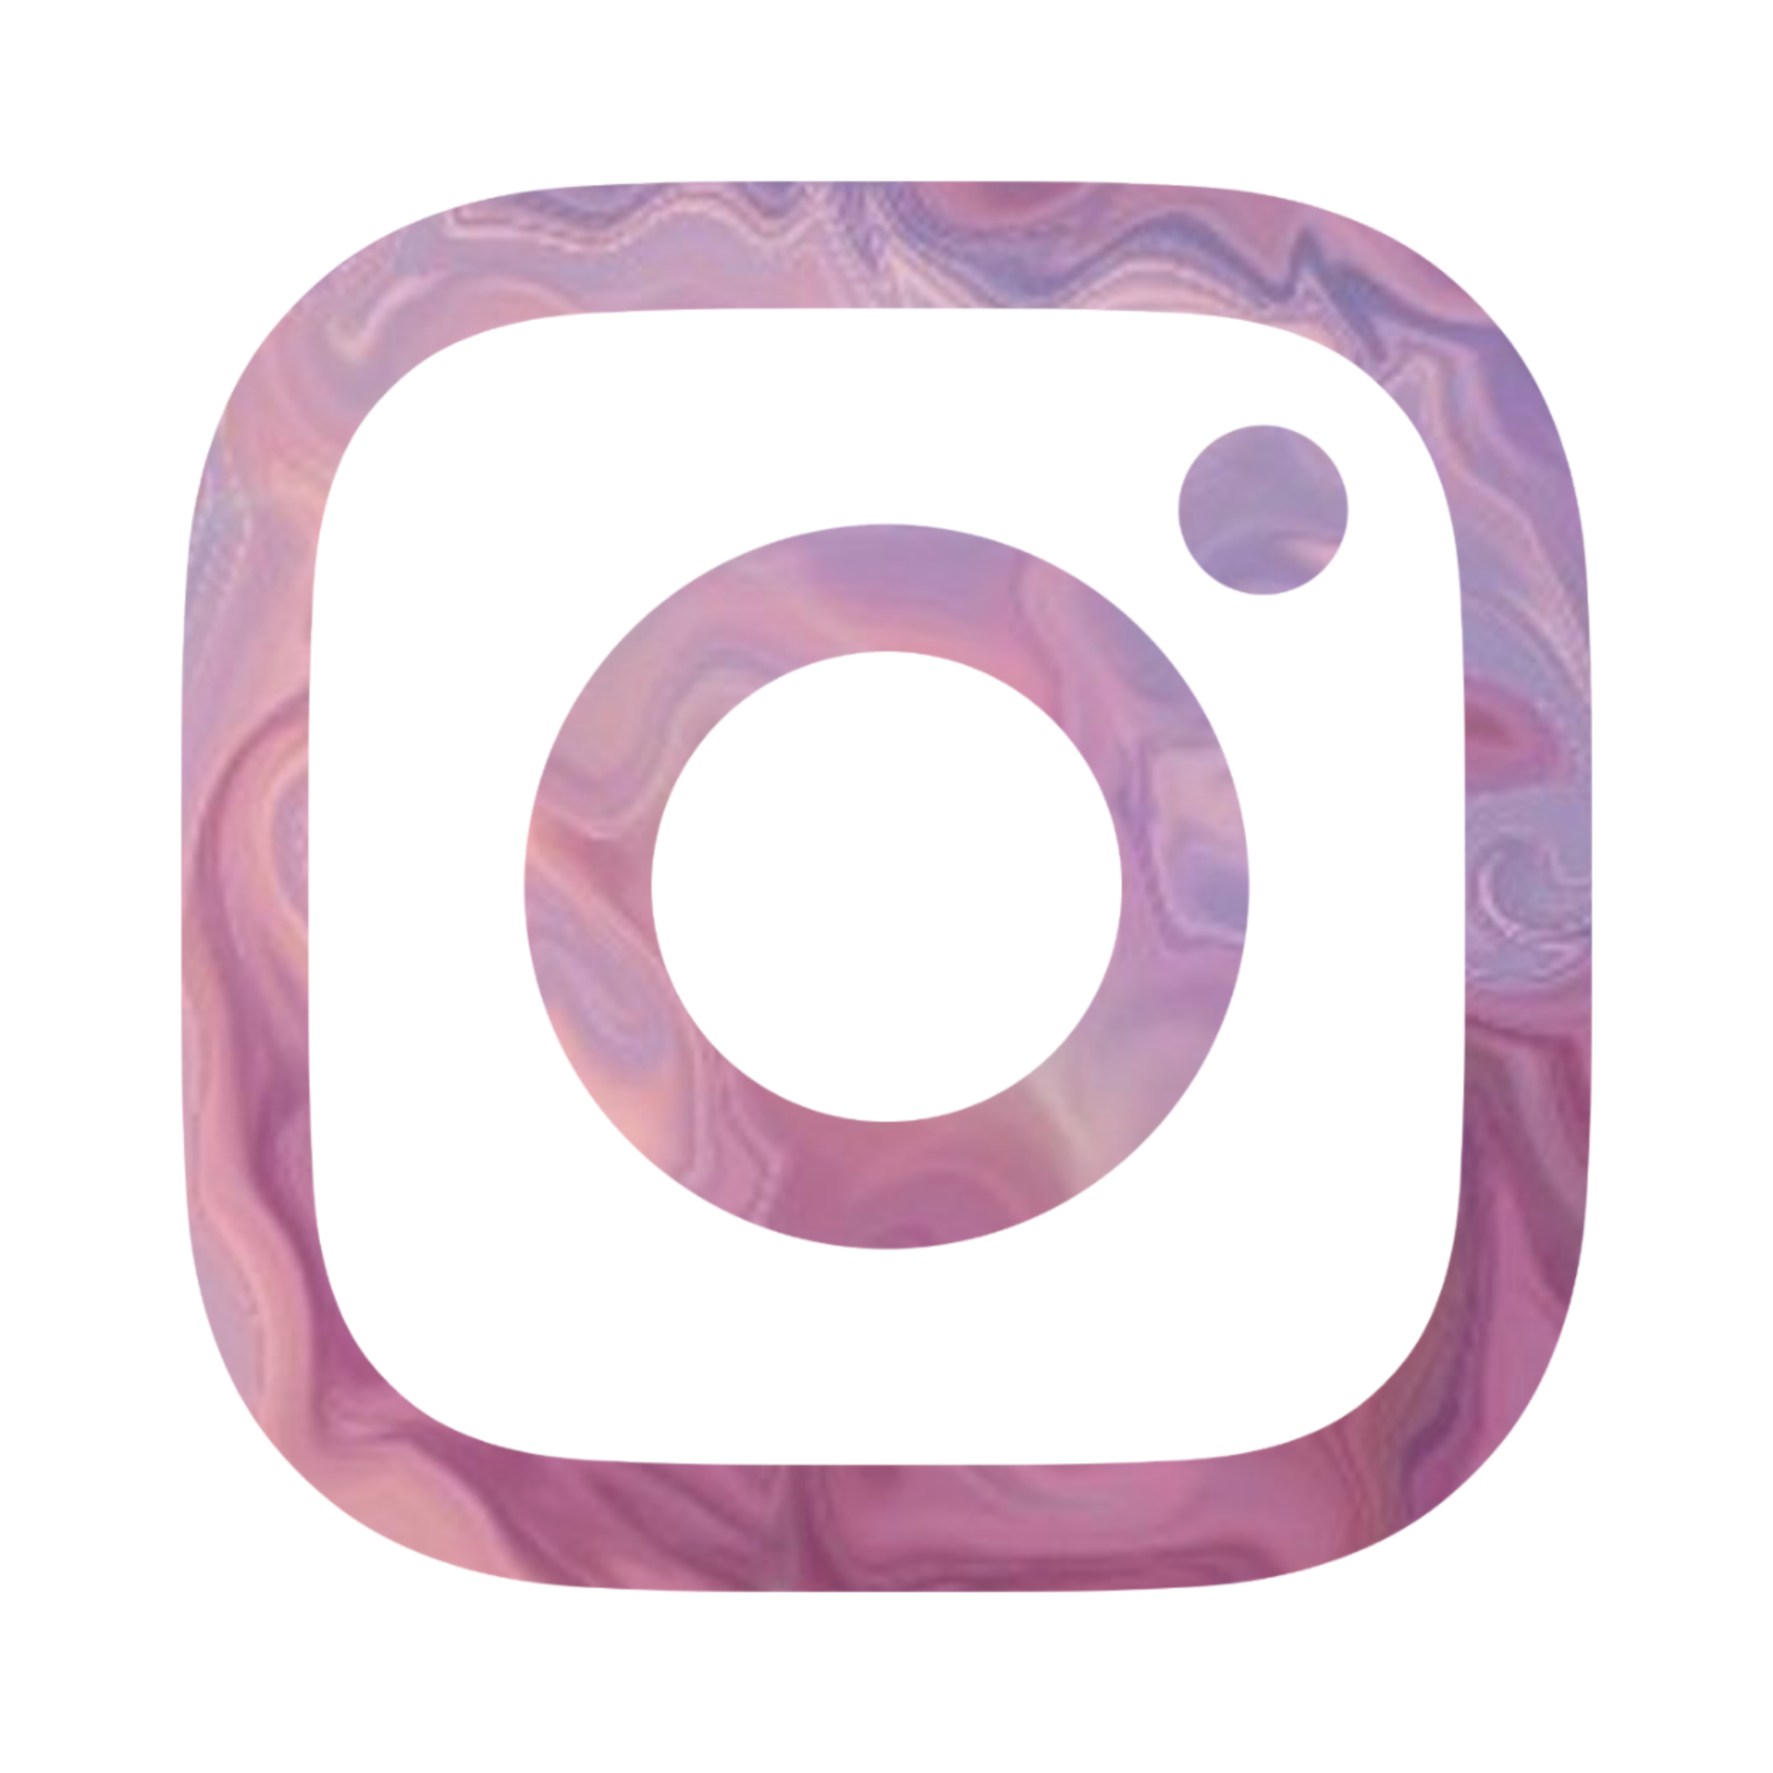 Aesthetic Instagram Logo Pink - Largest Wallpaper Portal